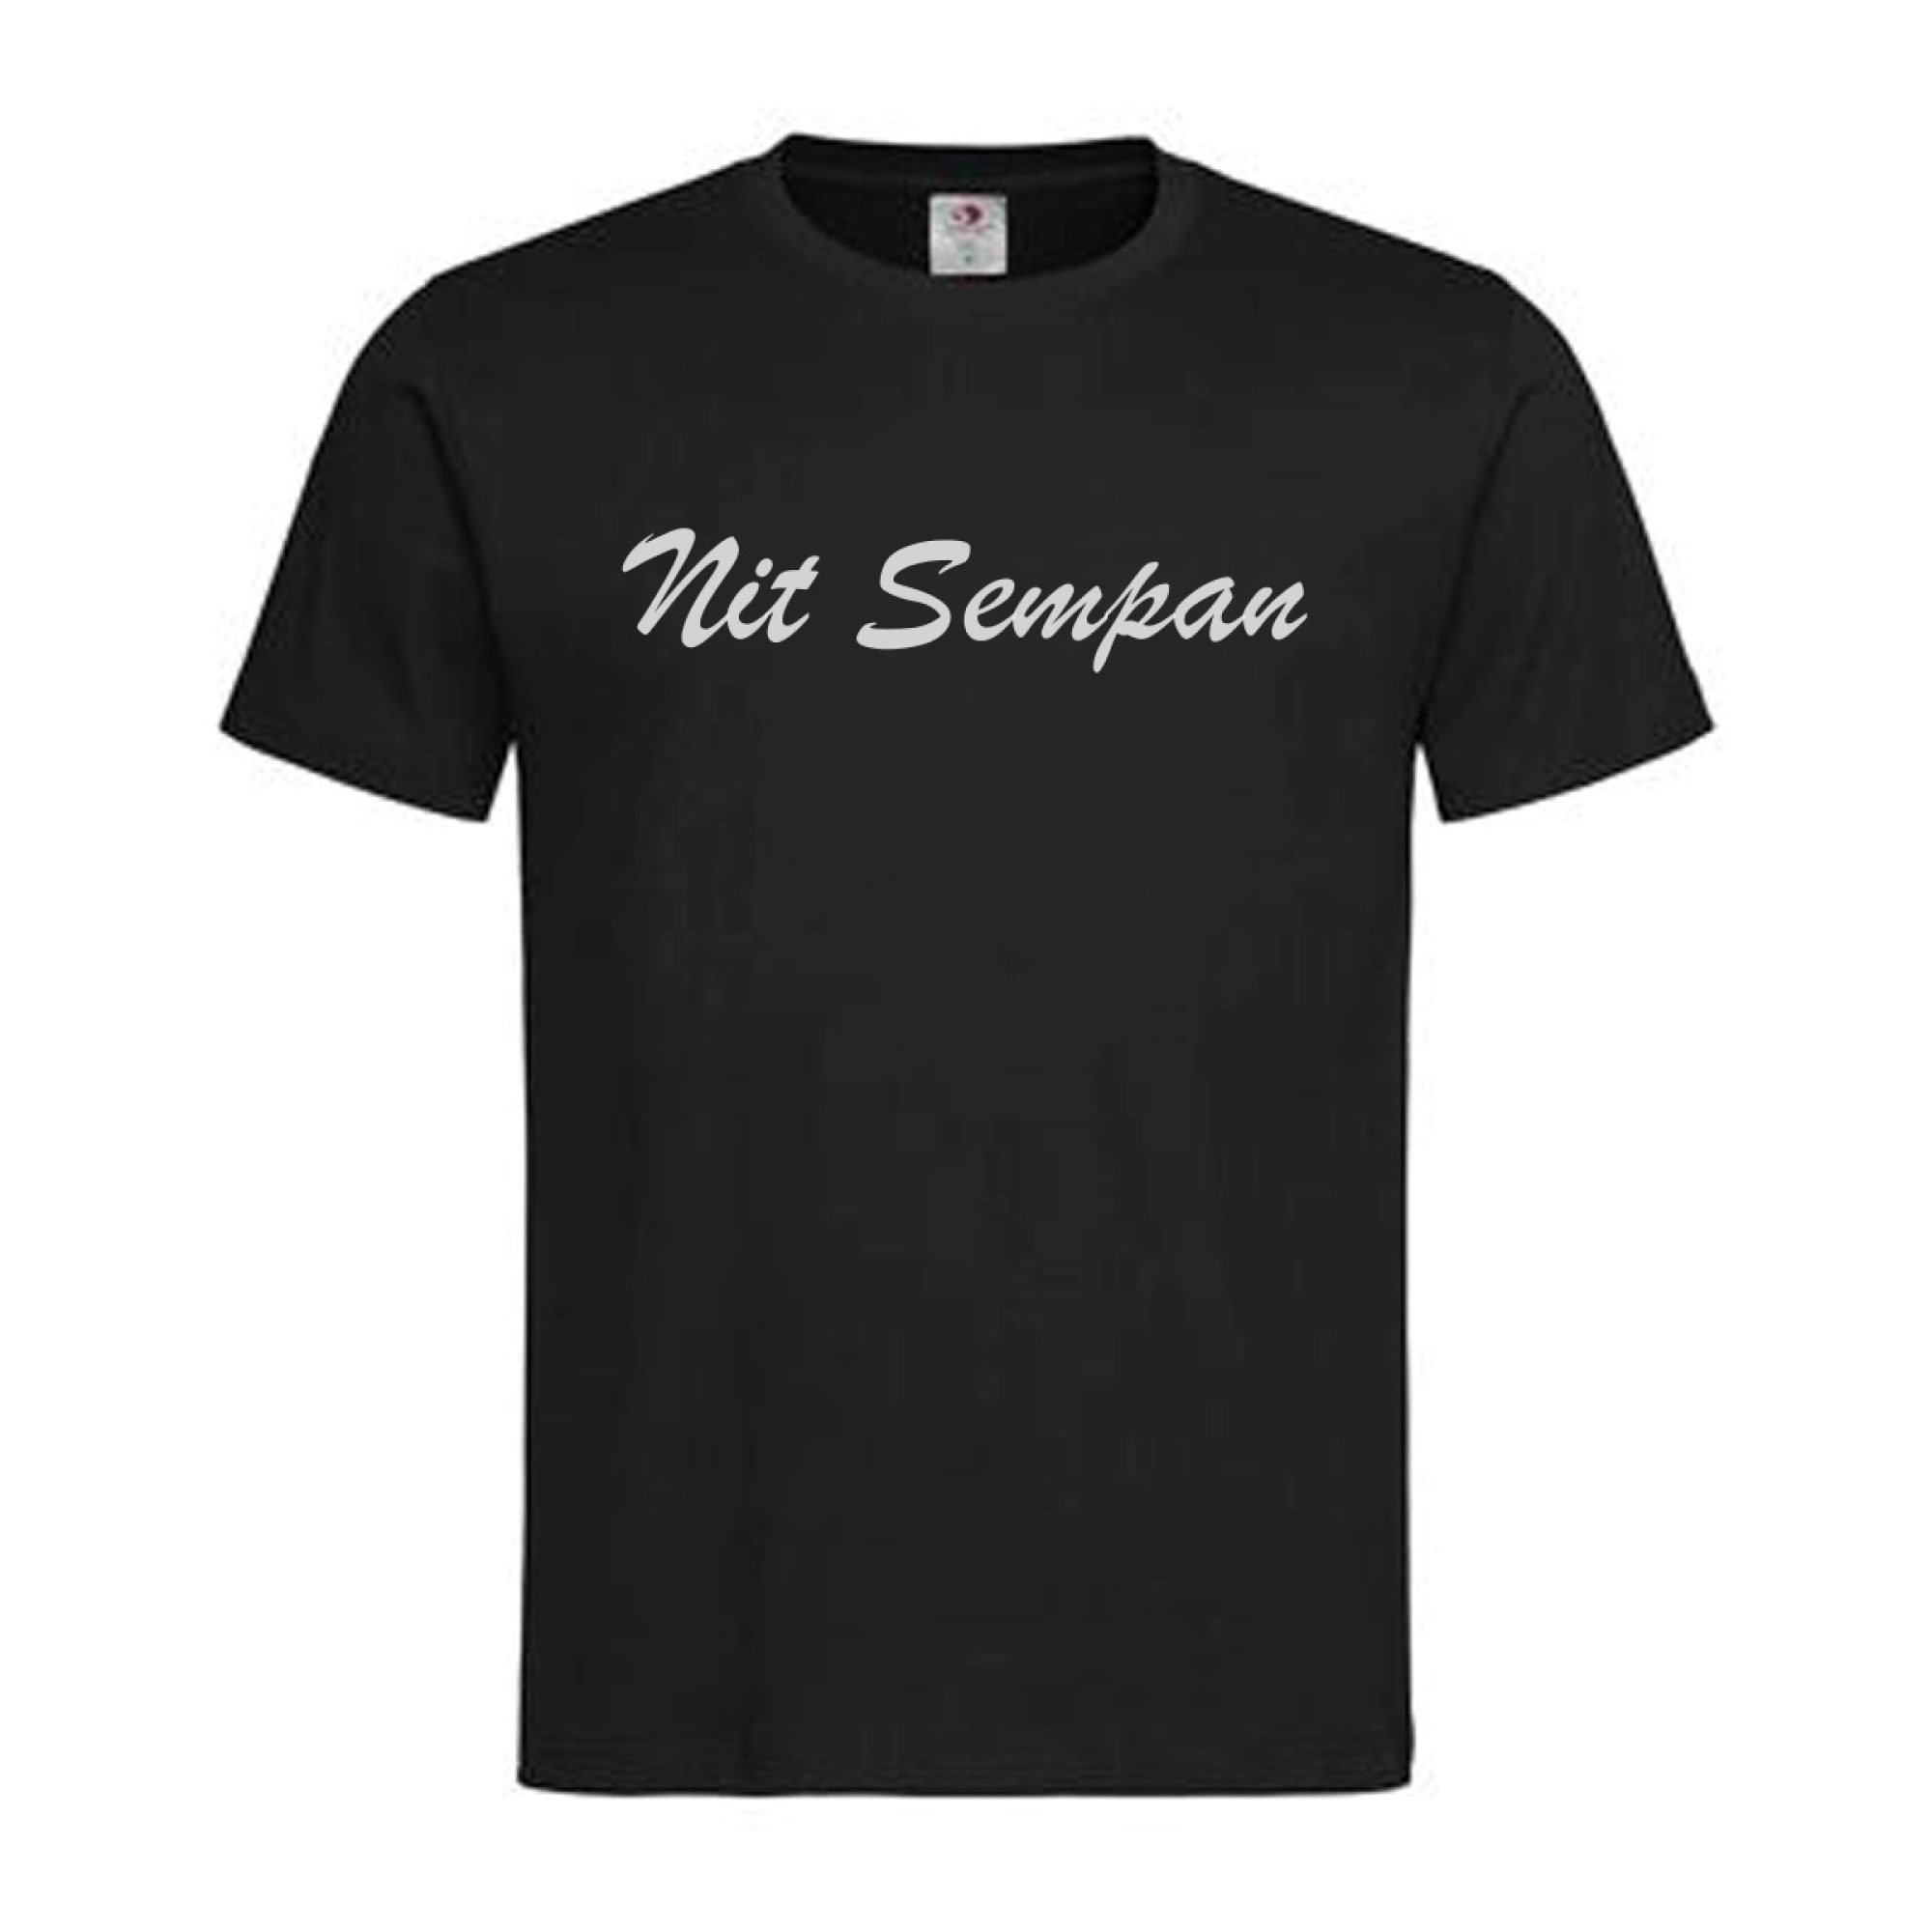 T-Shirt Kärnten Nit Sempan – Nicht Jammern in Mundart, Dialekt